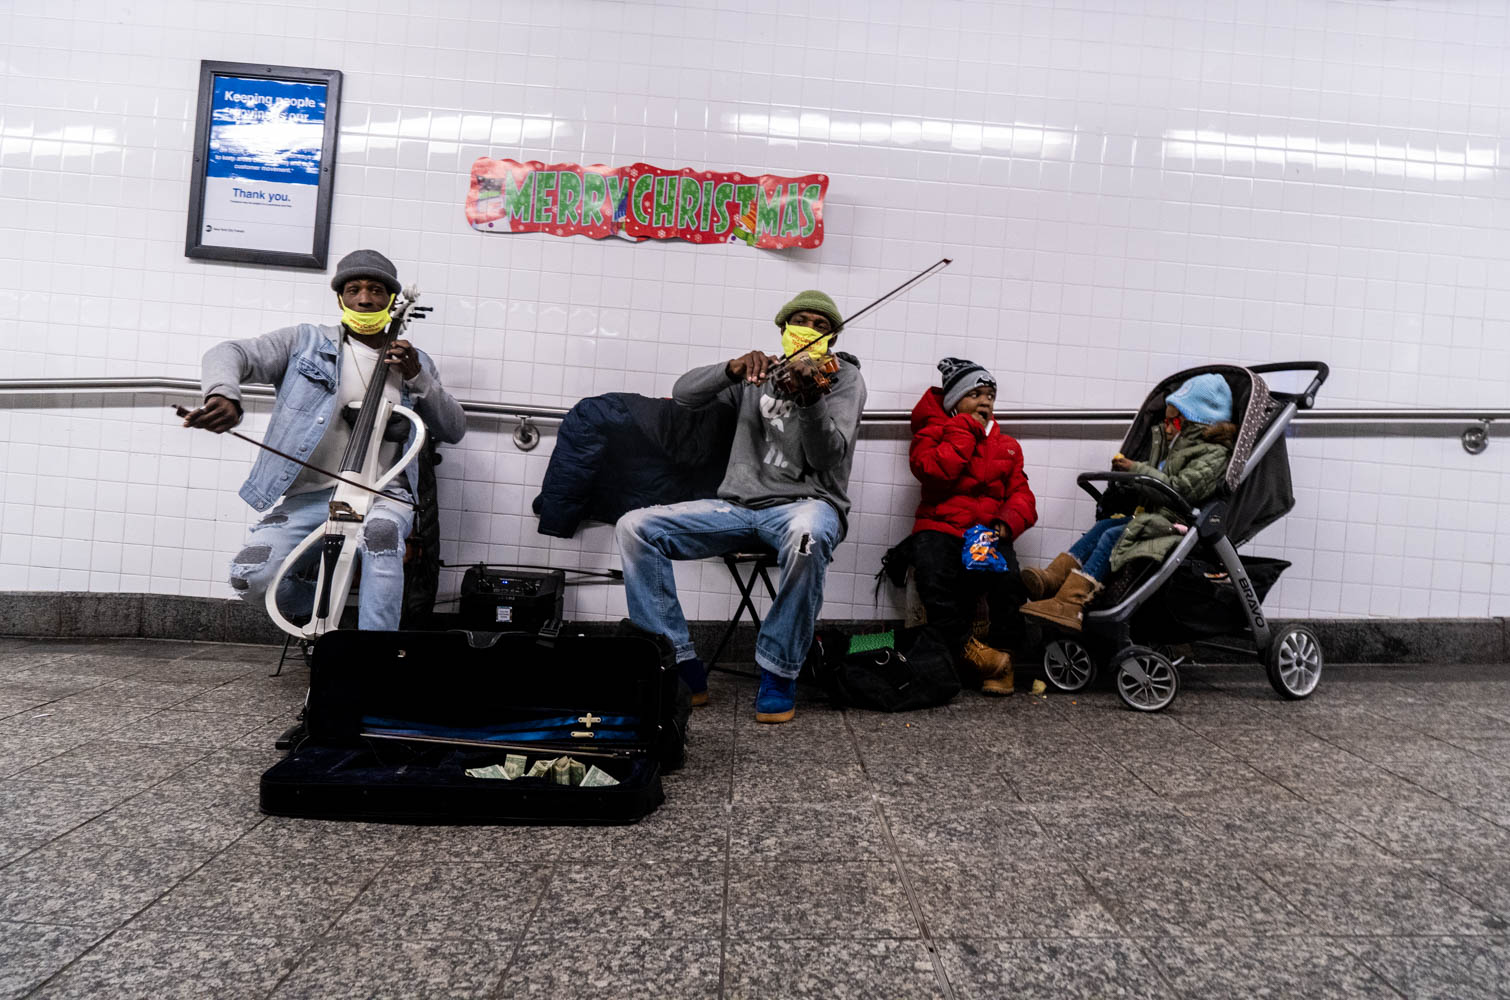 December 23, 2020: Merry Christmas. Musicians and children, Penn Station, New York, New York. © Camilo José Vergara